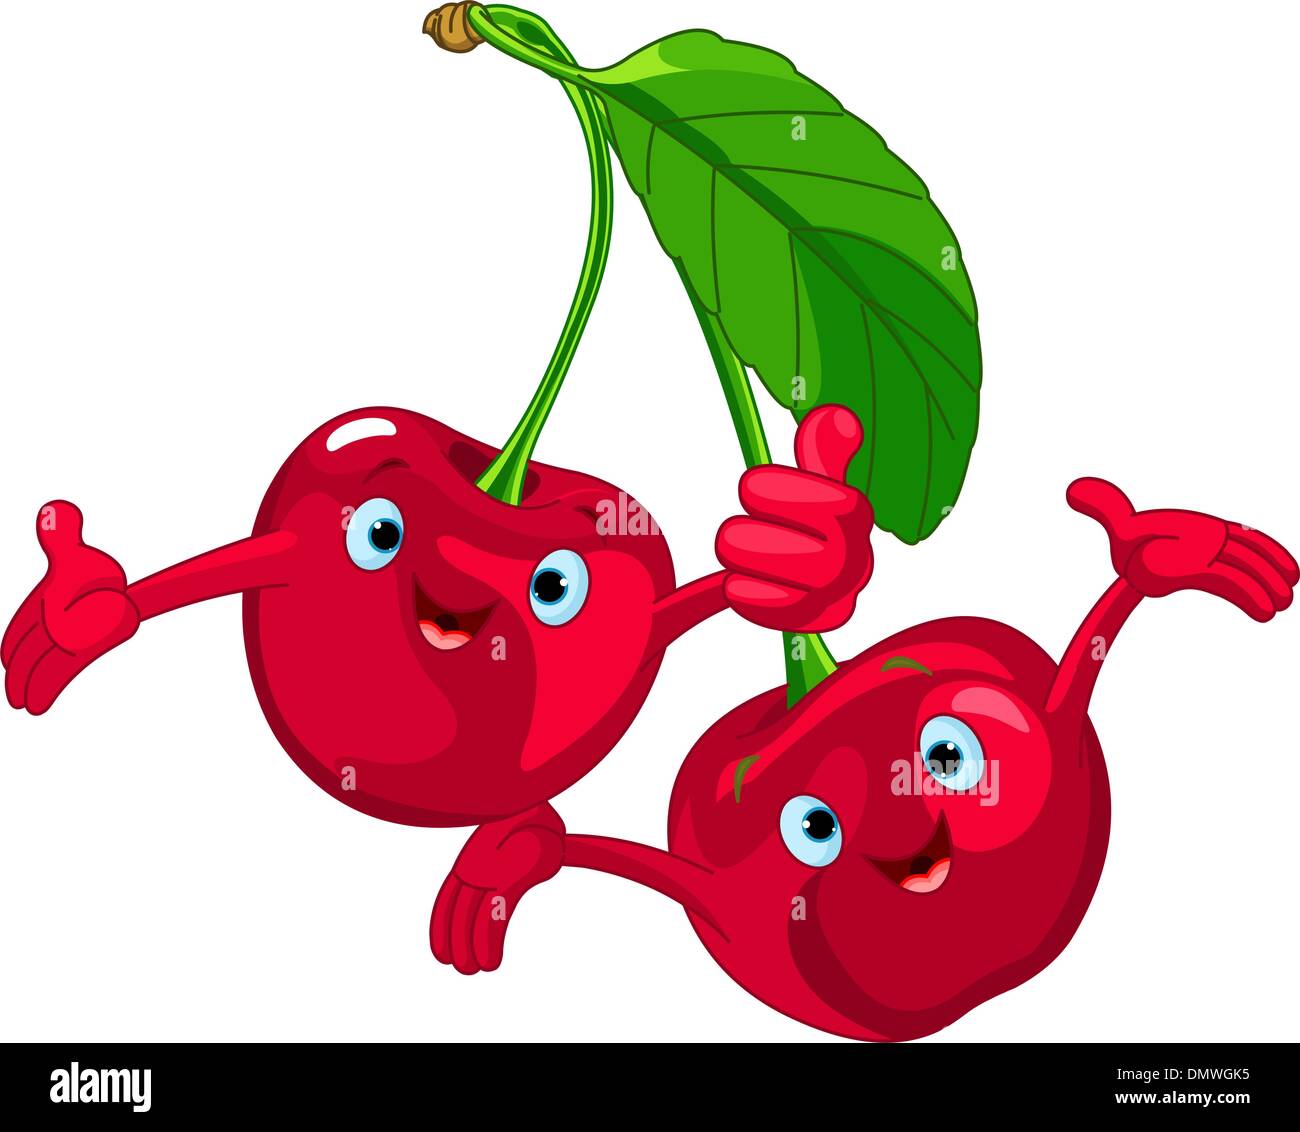 Cheerful Cartoon Cherries character Stock Vector